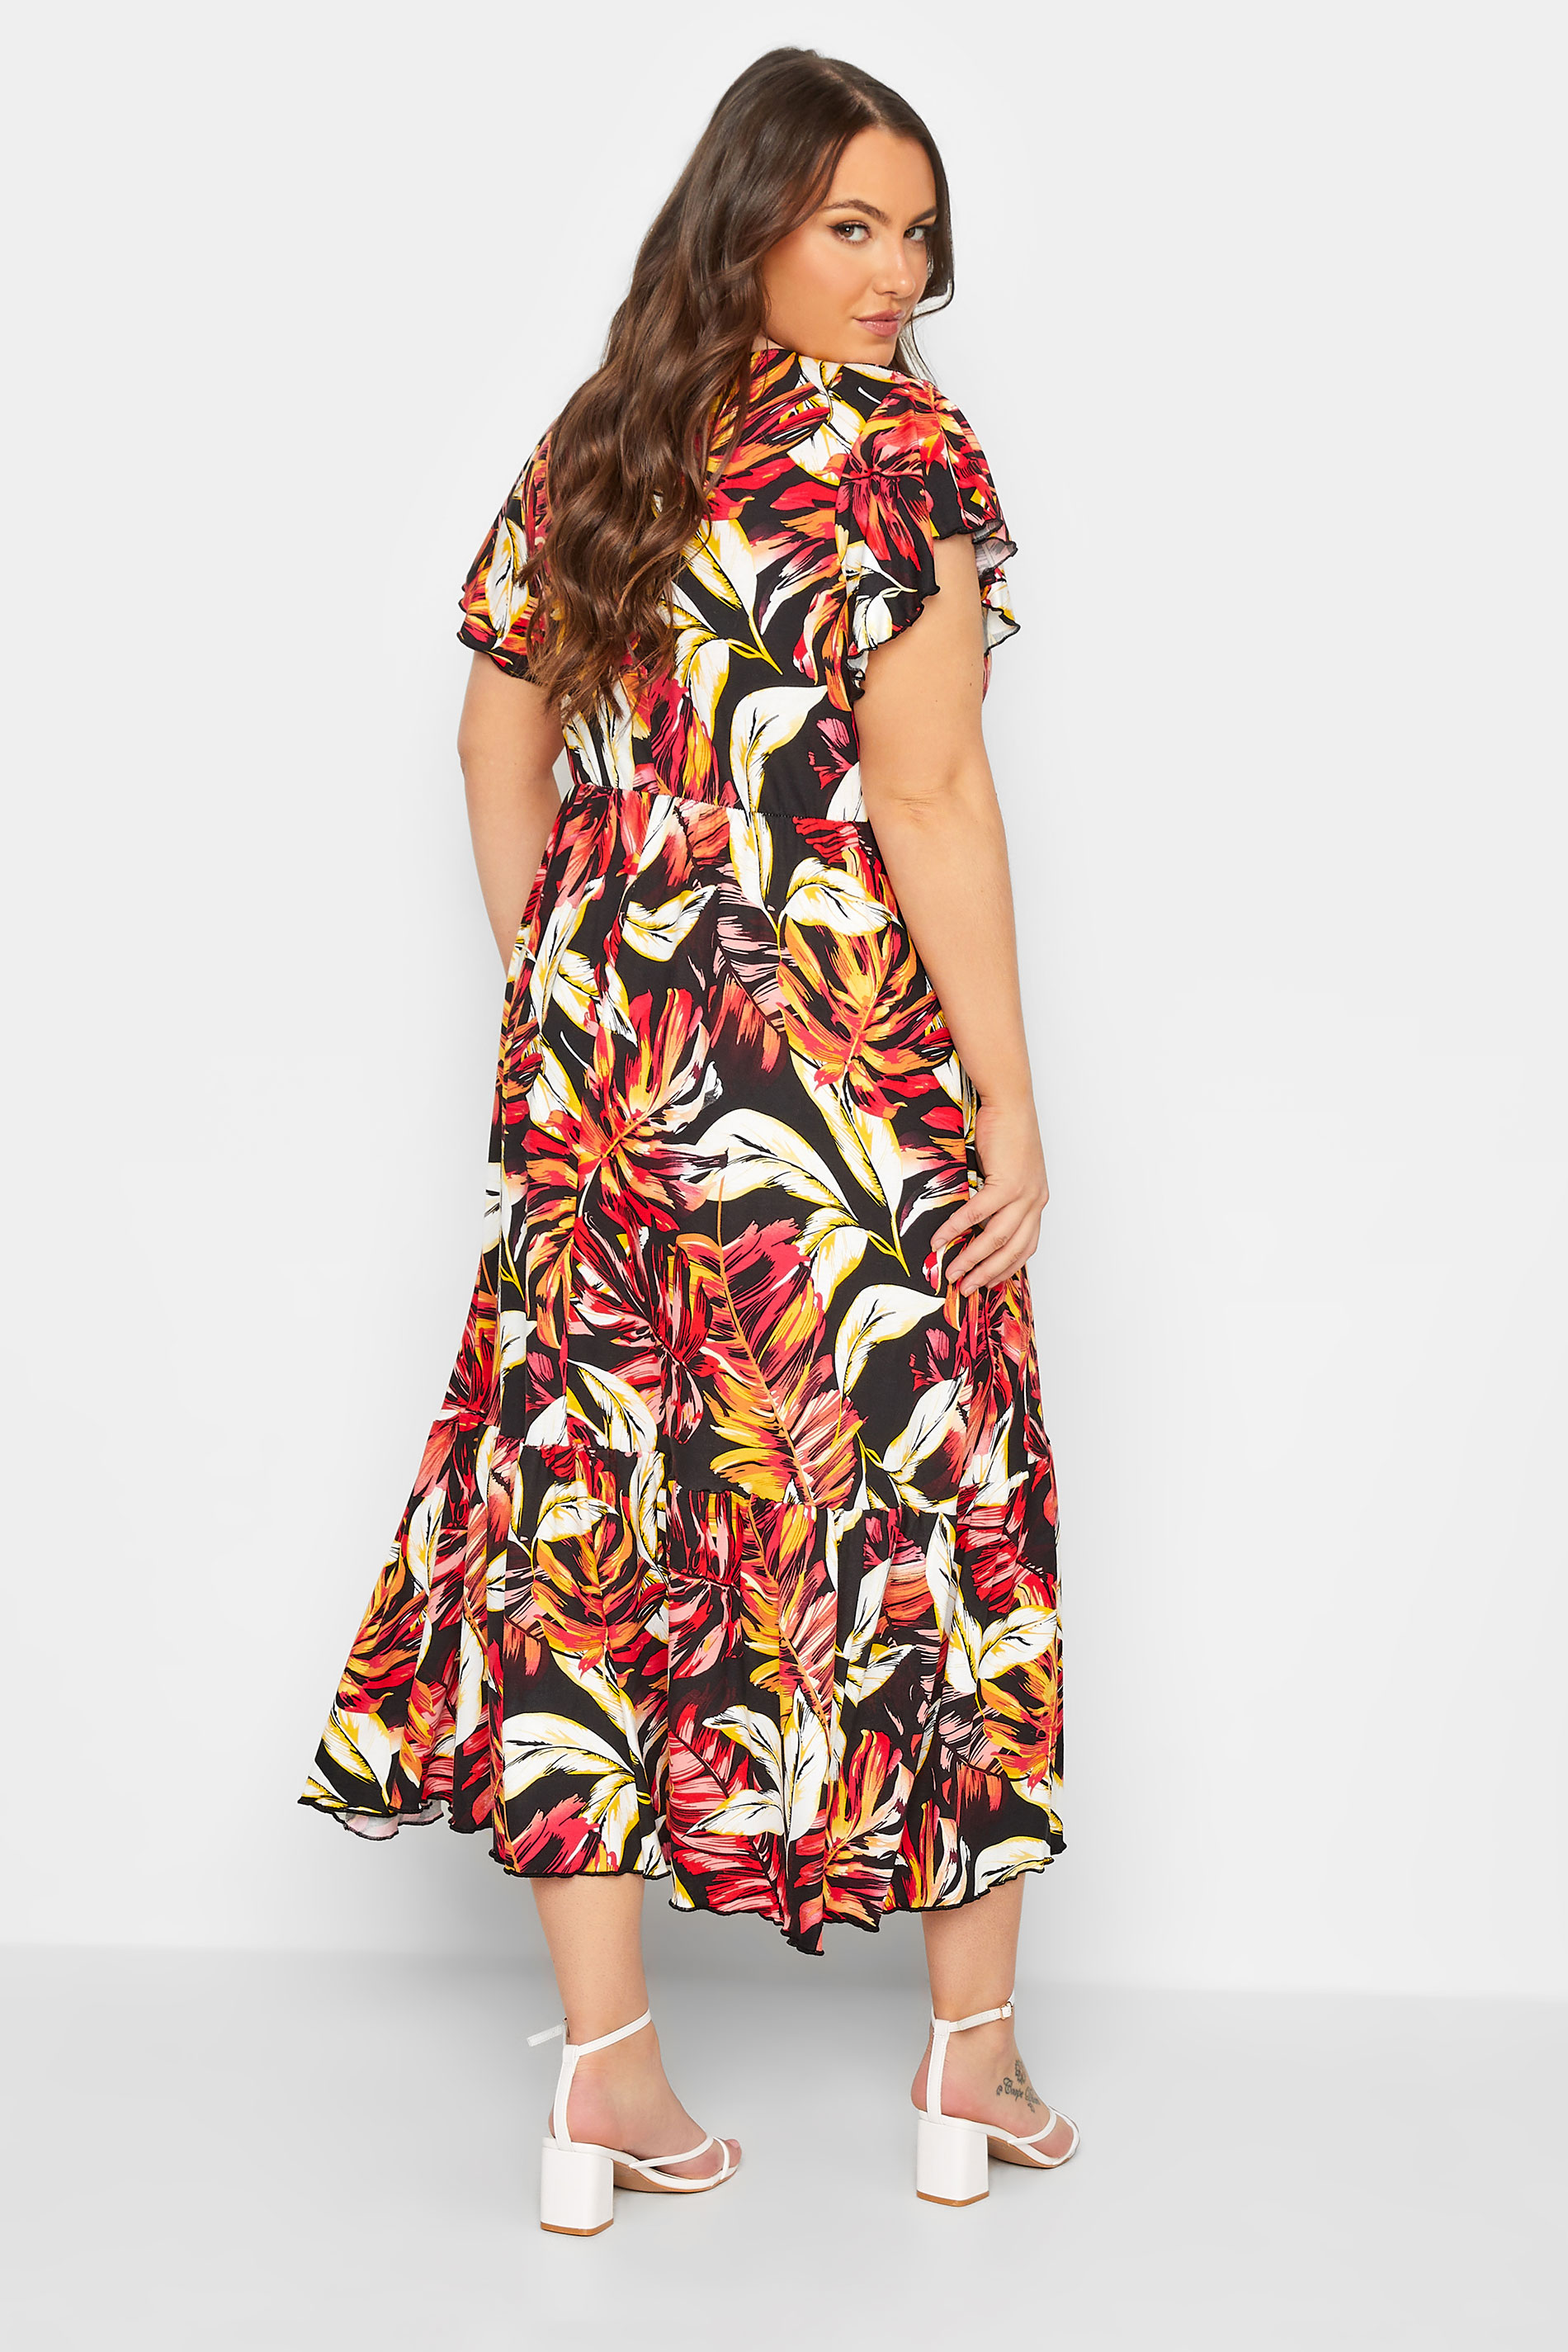 YOURS Plus Size Black & Orange Leaf Print Frill Sleeve Wrap Maxi Dress | Yours Clothing 3